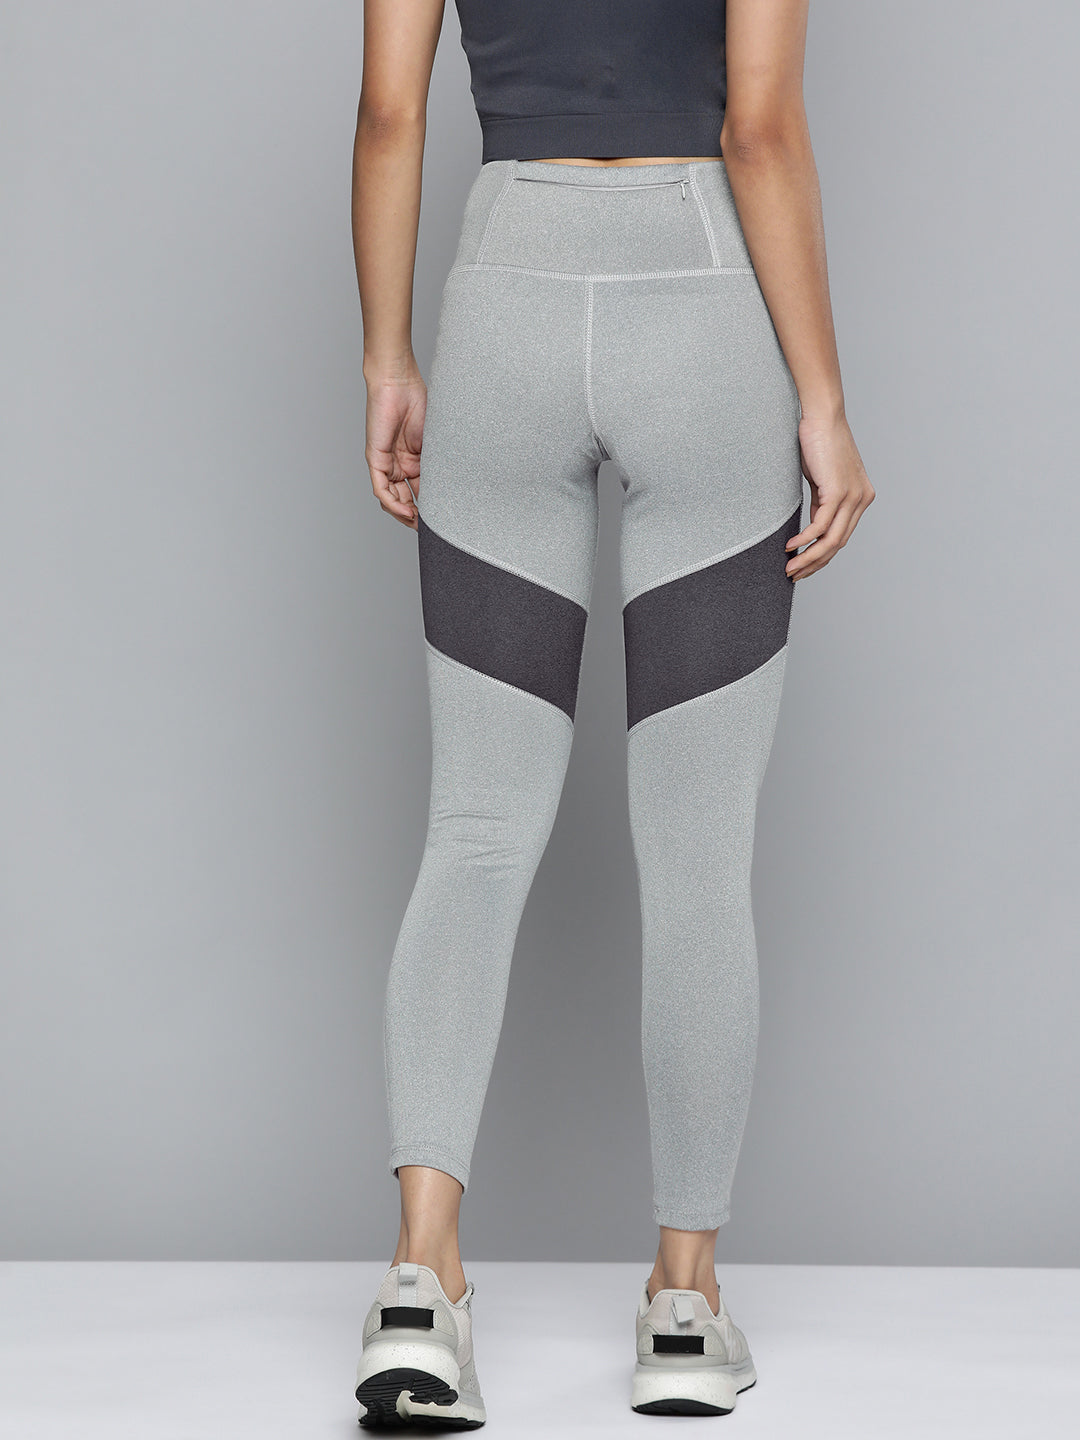 Alcis Women Grey Colourblocked Cropped Sport Tights